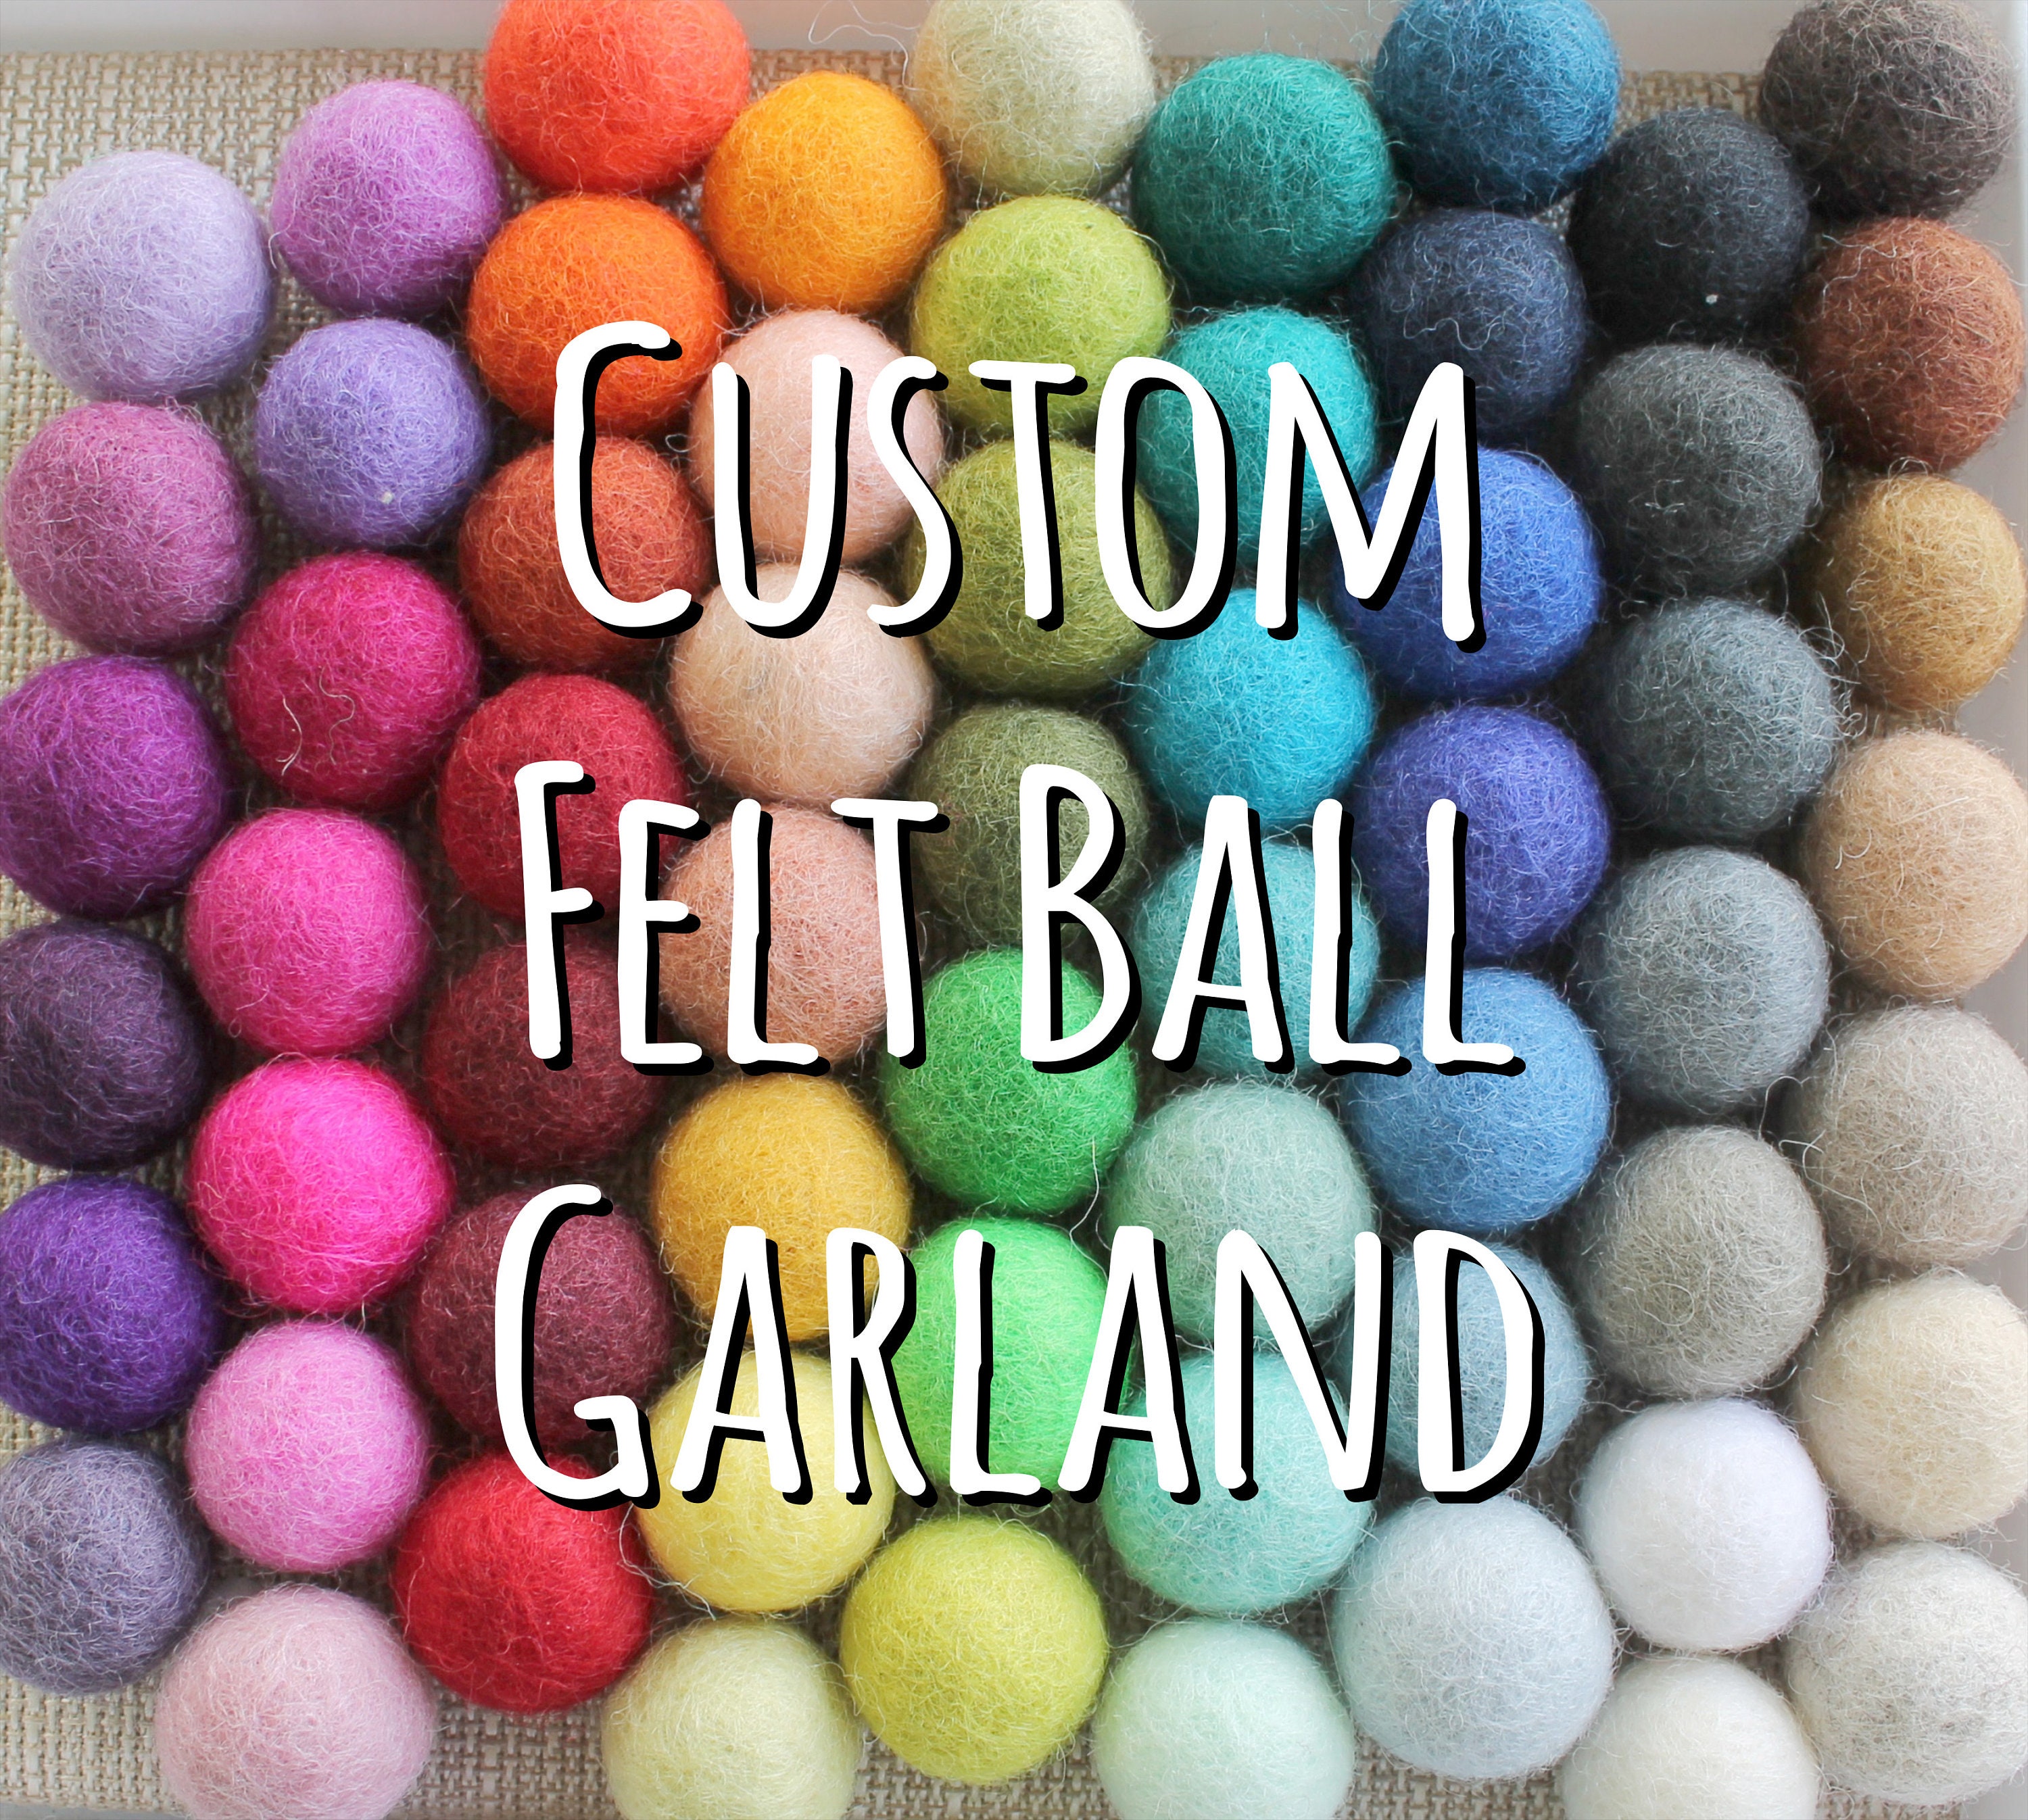 6 Large Yarn Pom Poms 3 Inch Custom Yarn Balls for Hats or Party  Decorations DIY Craft Pompoms 